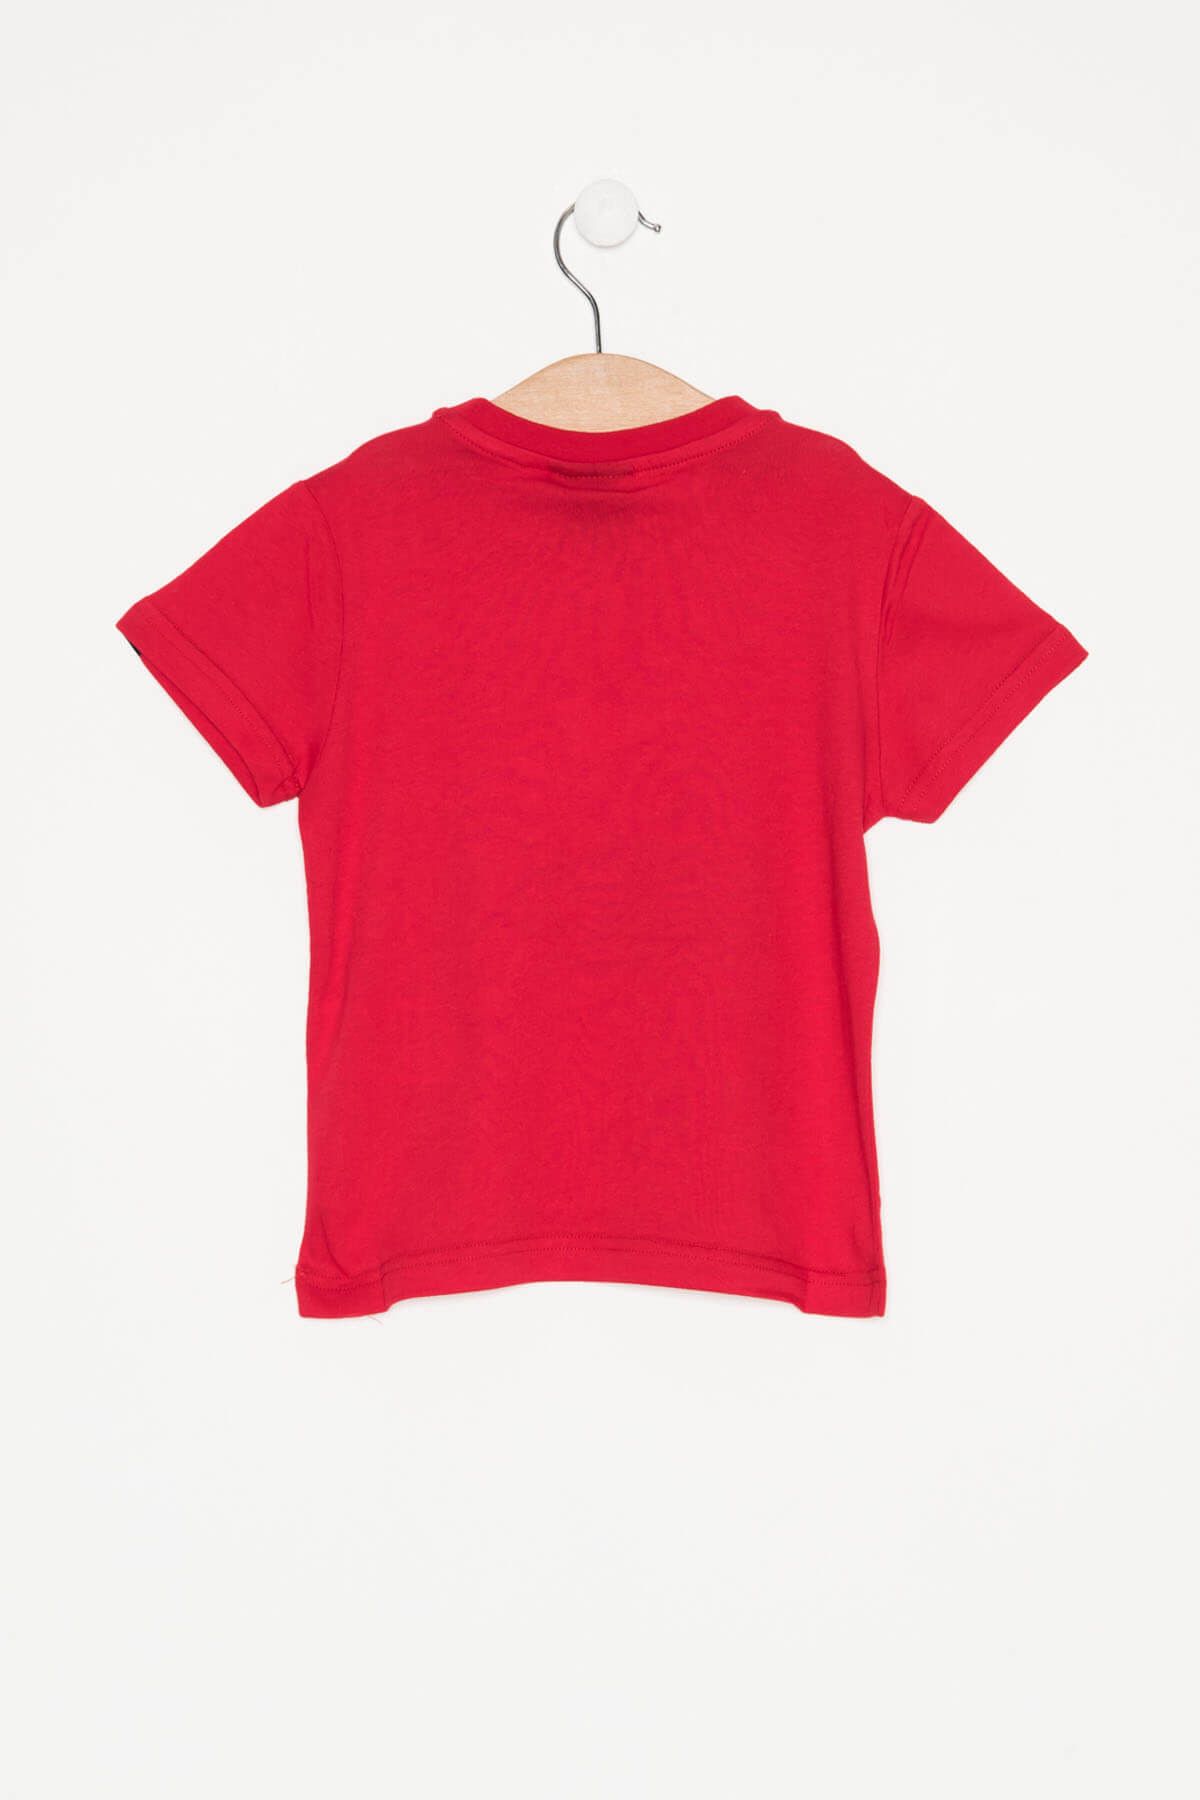 hummel تی شرت کودک یونیسکس Red